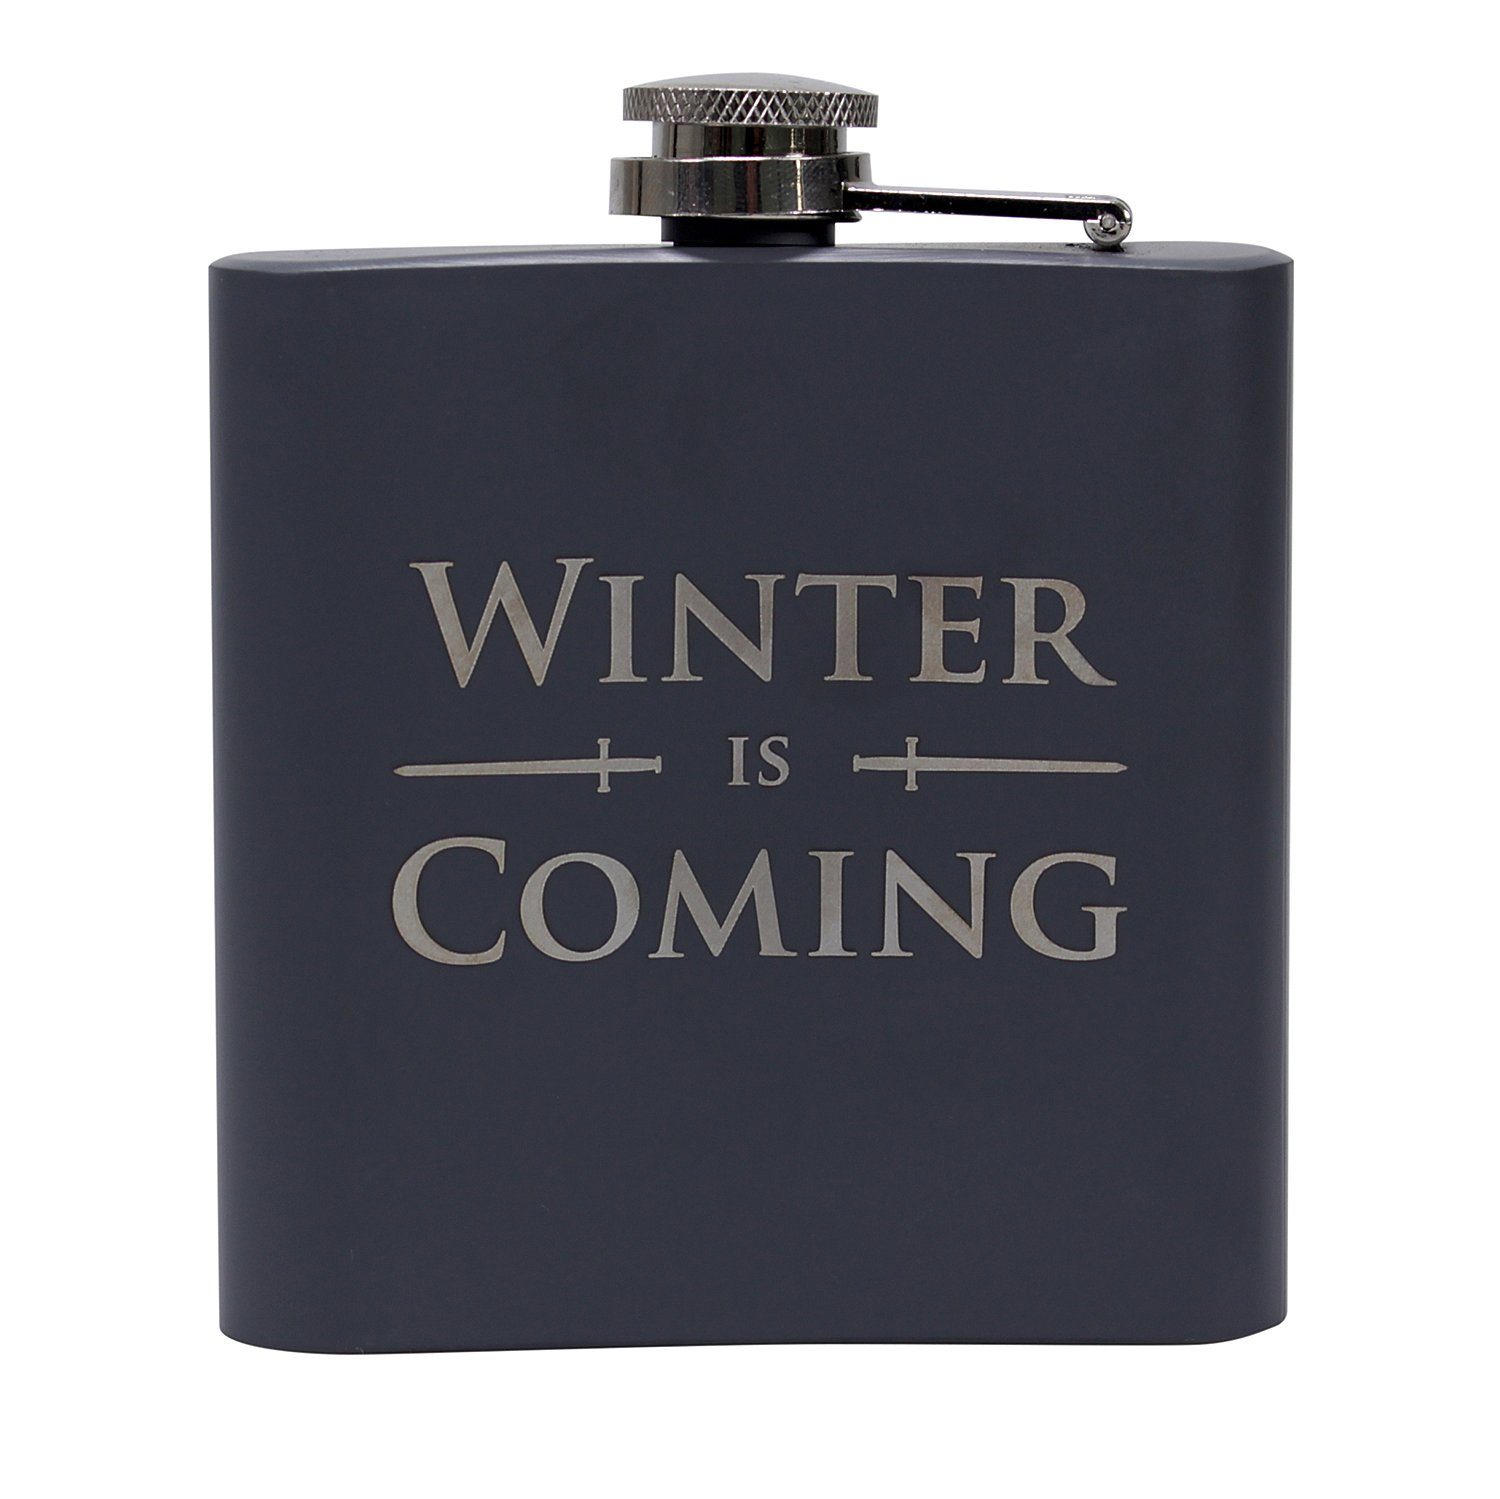 Game of Winter Tasse is Thrones Flachmann HMB Coming